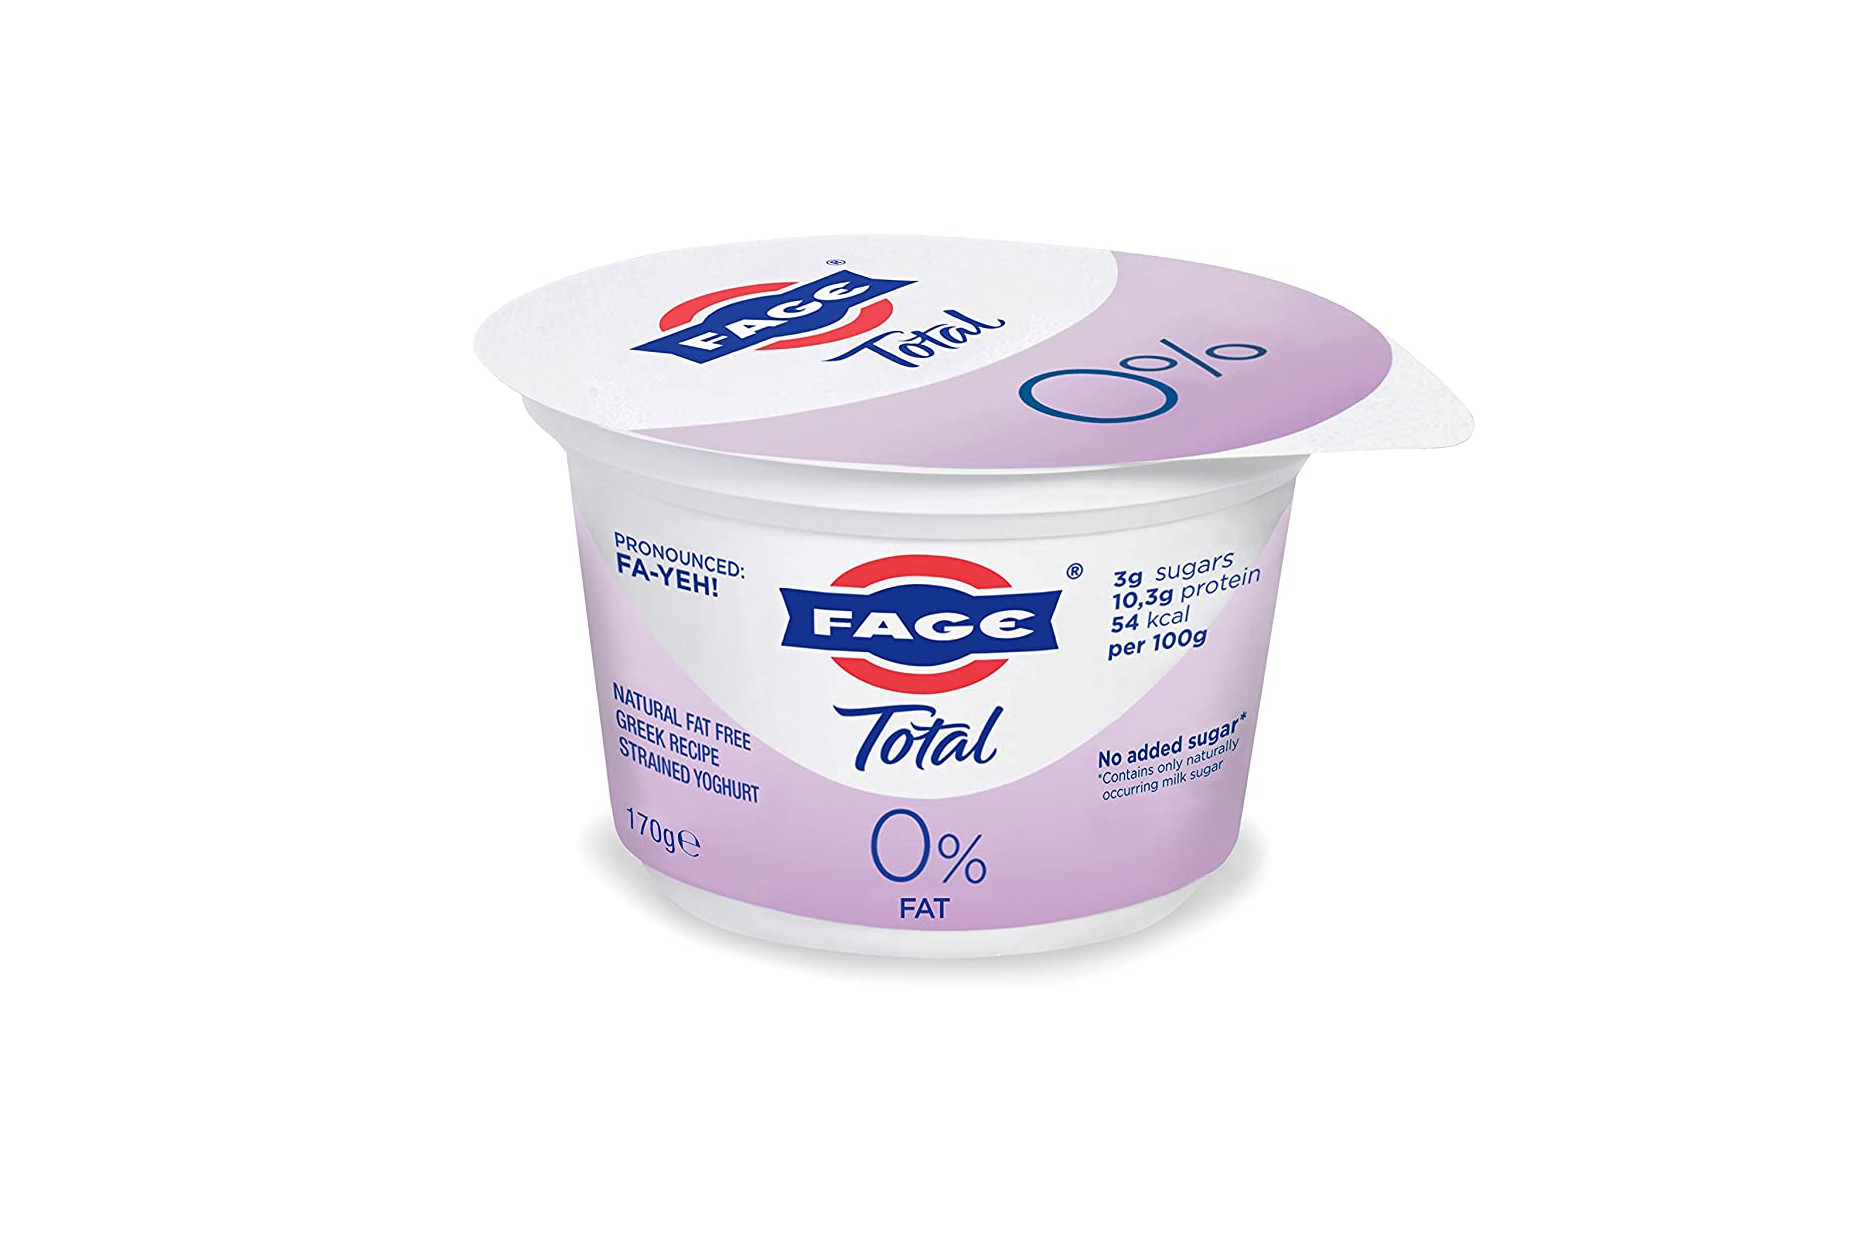 Greek yogurt. Греческий йогурт. Fage йогурт. Обезжиренный греческий йогурт Fage.. Лучший греческий йогурт.